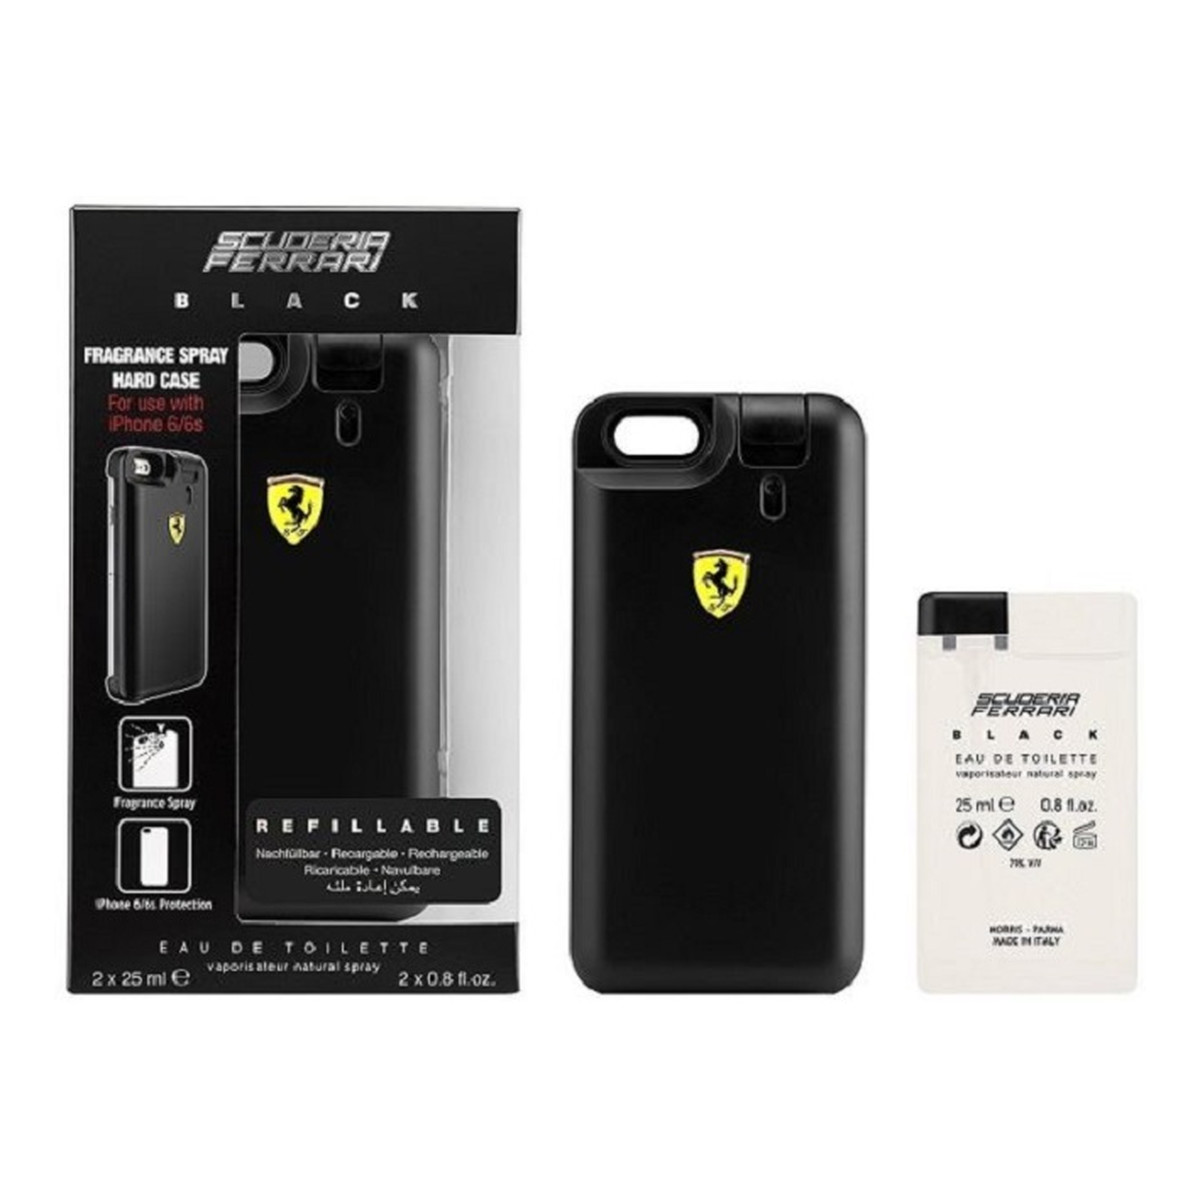 Ferrari ZESTAW FERRARI Black perfumy męskie - woda perfumowana 2x25ml wkład + etui na telefon iPhone 6 & iPhone 6s 50ml